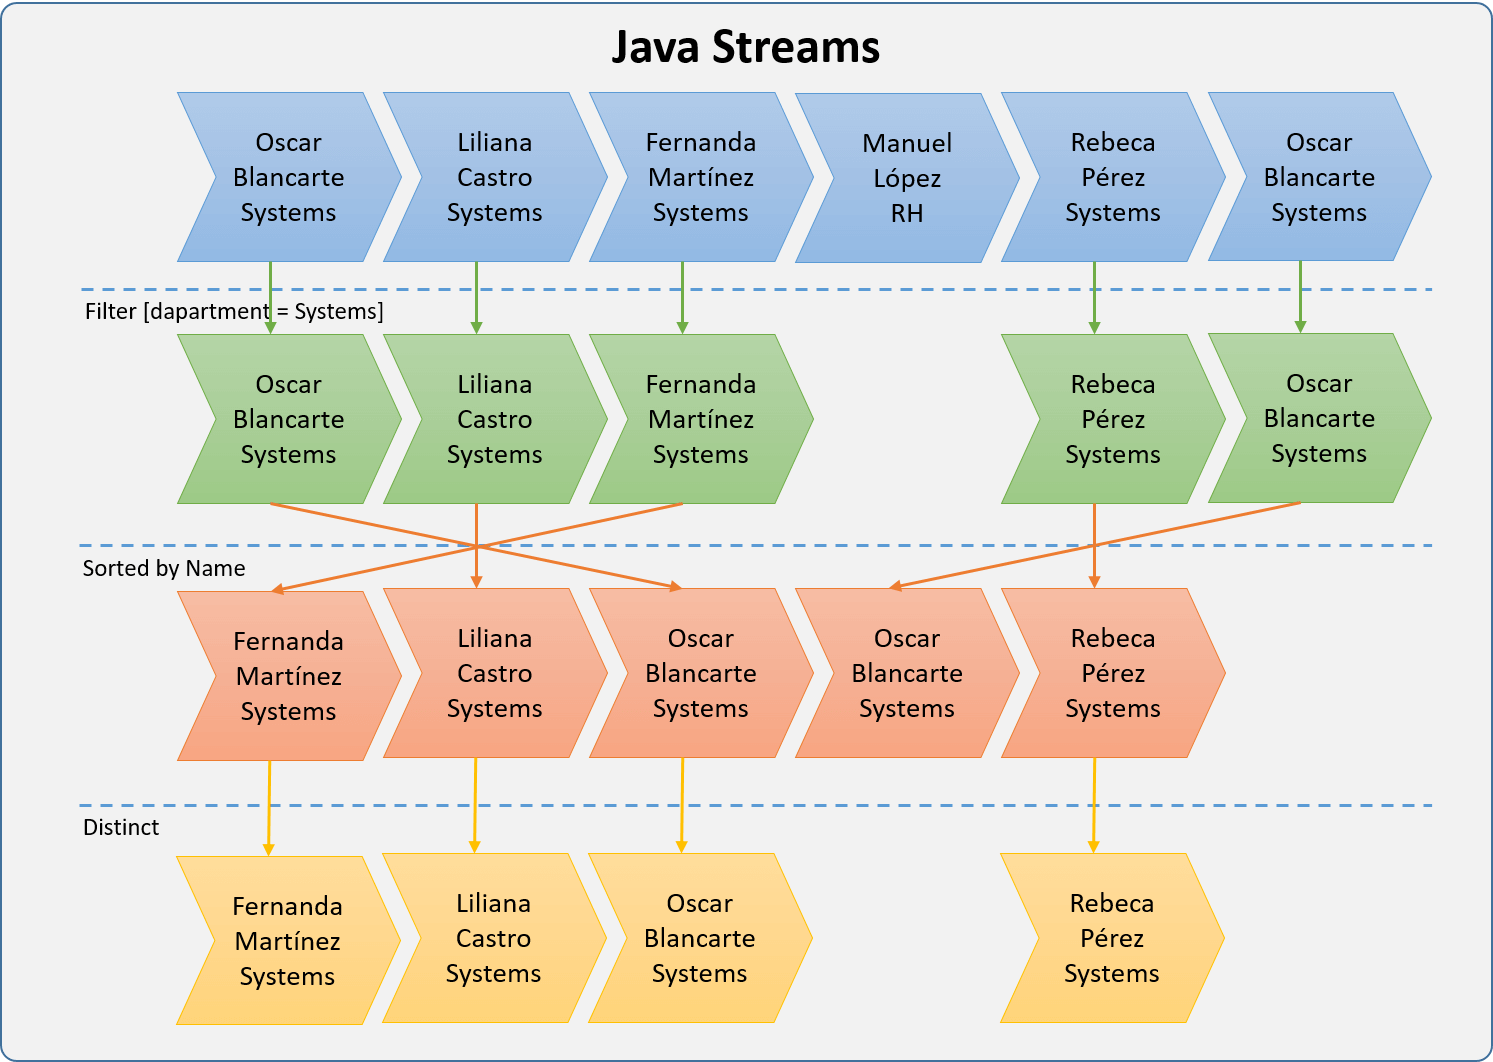 Java steam filter